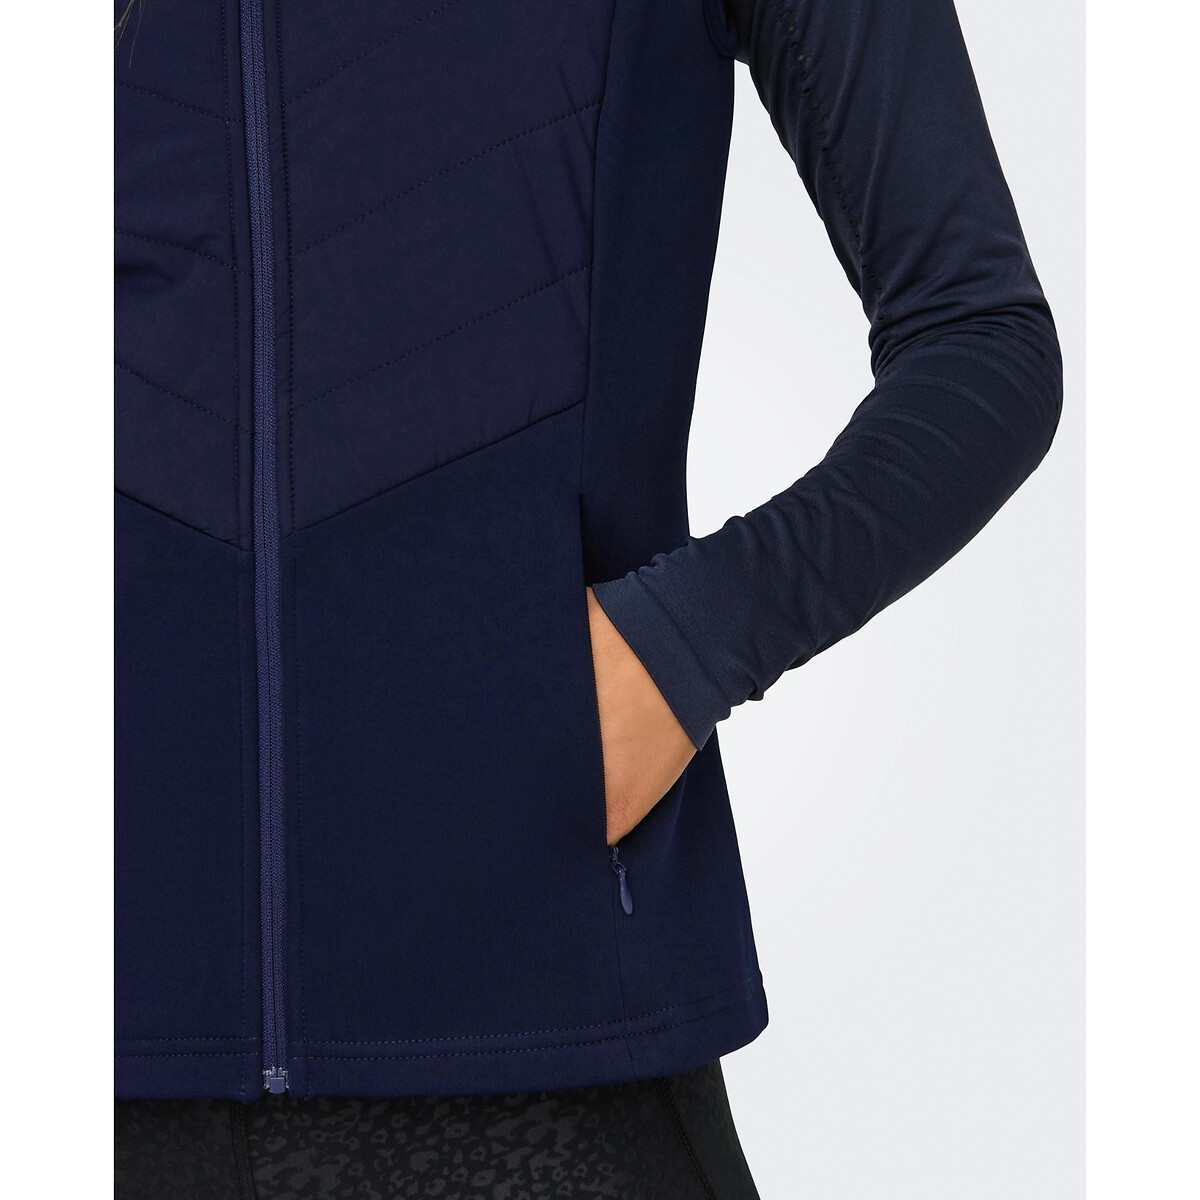 Куртка на молнии без рукавов с воротником-стойкой Jettina  M синий LaRedoute, размер M - фото 3